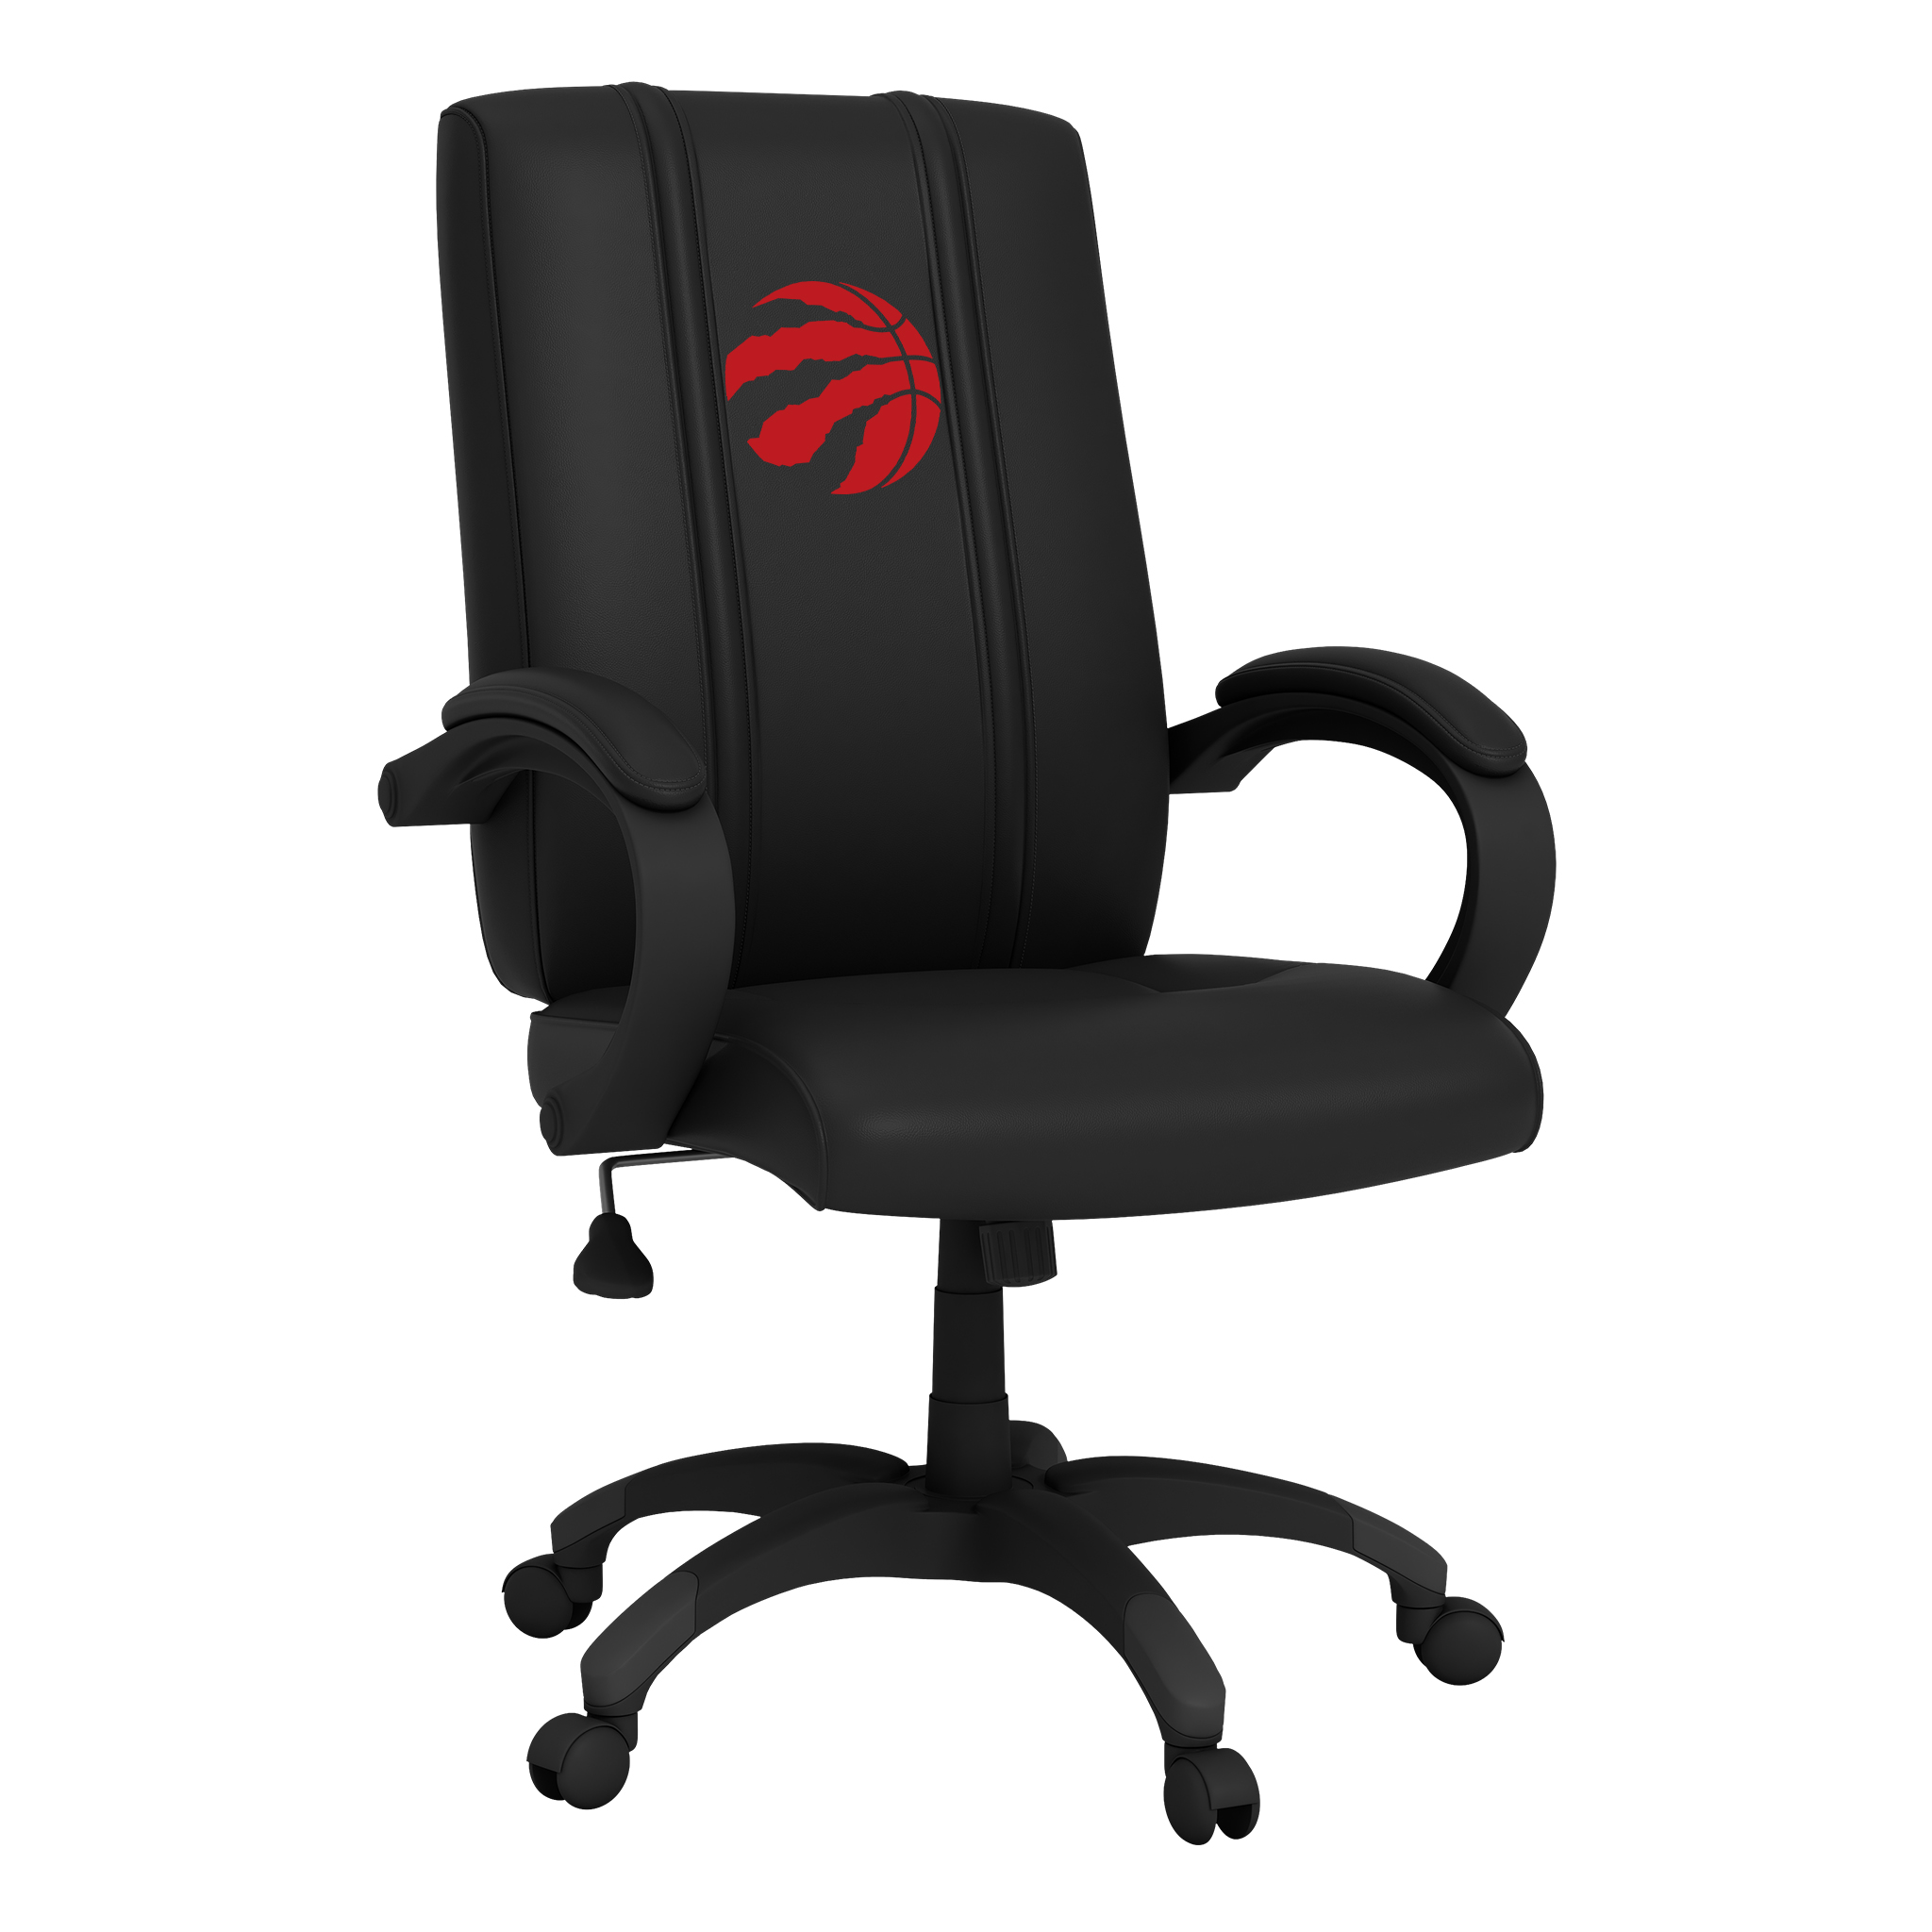 Toronto Raptors Office Chair 1000 with Toronto Raptors Primary Red Logo